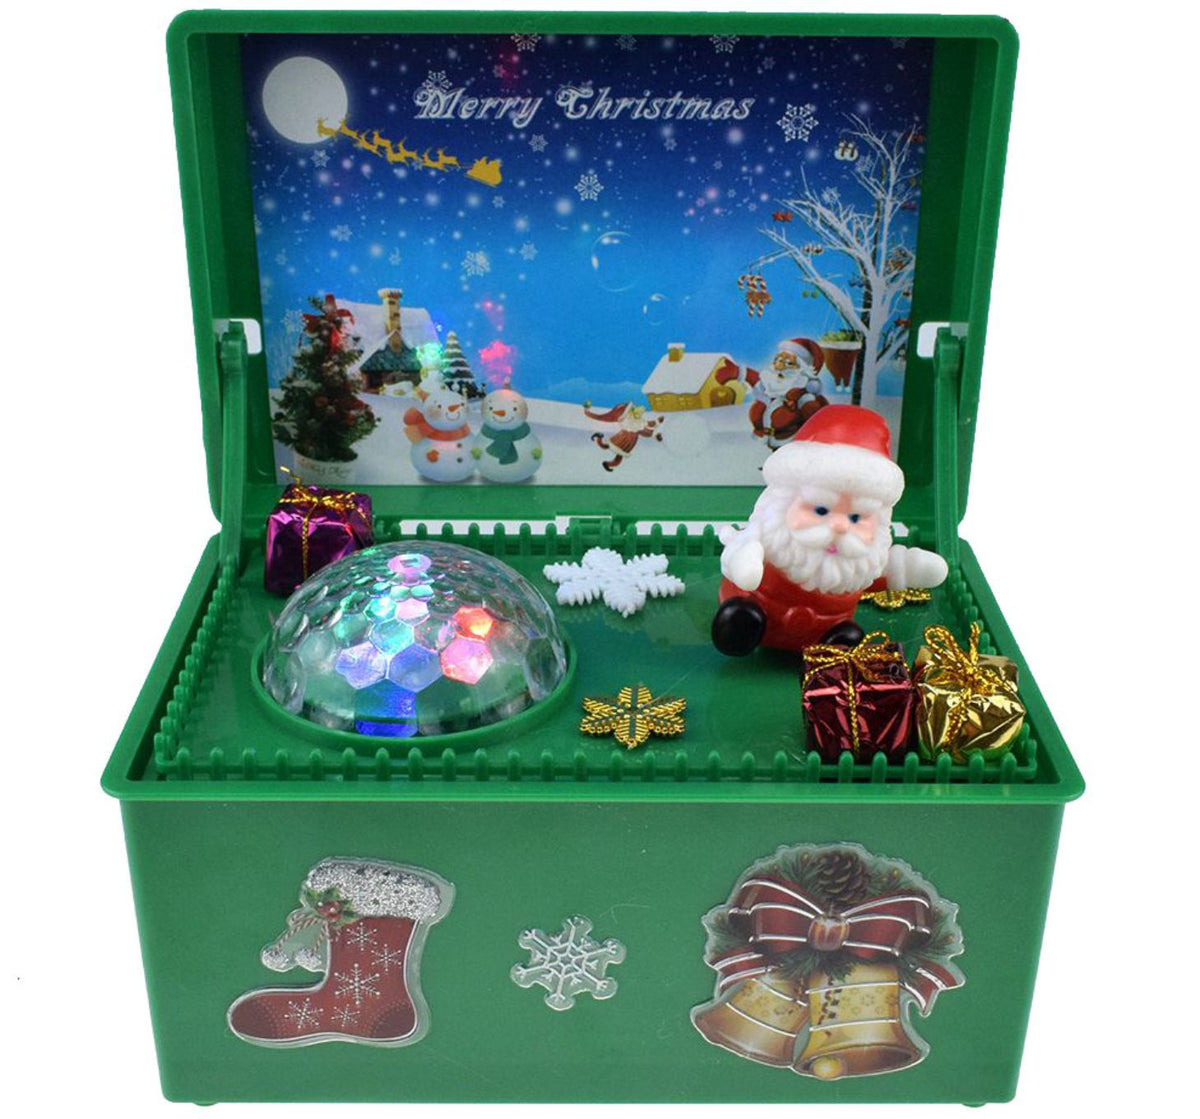 Electric lift Christmas music gift box Angelwarriorfitness.com